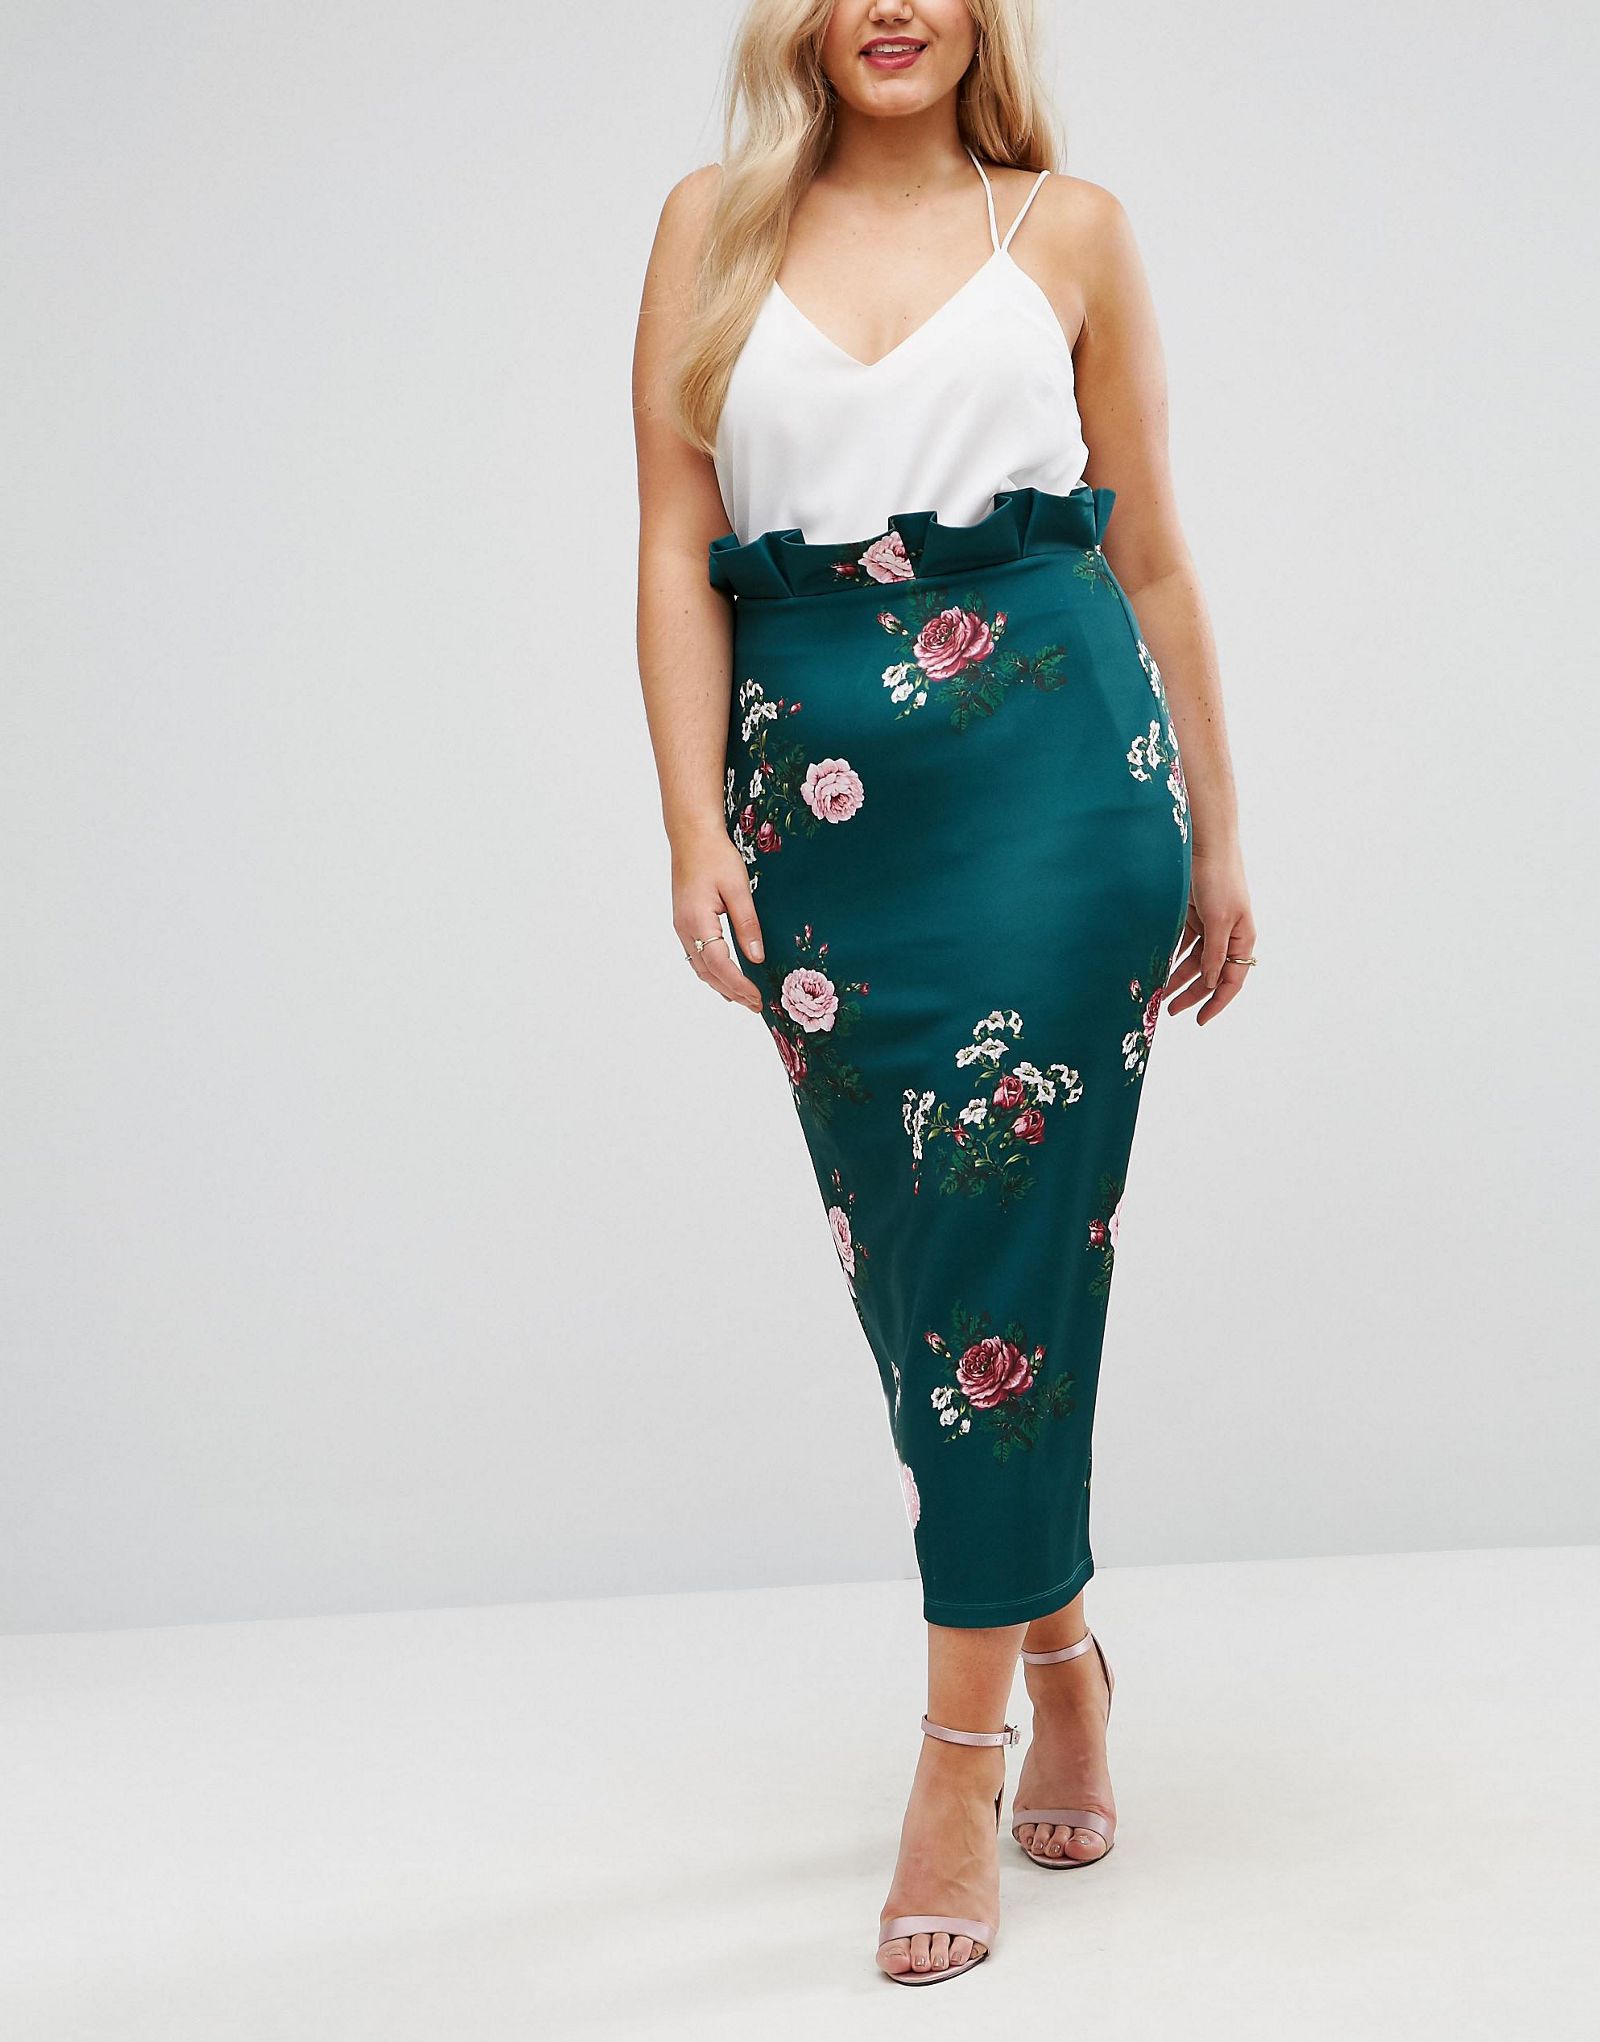 ASOS CURVE Paperbag Waist Pencil Skirt in Floral Print